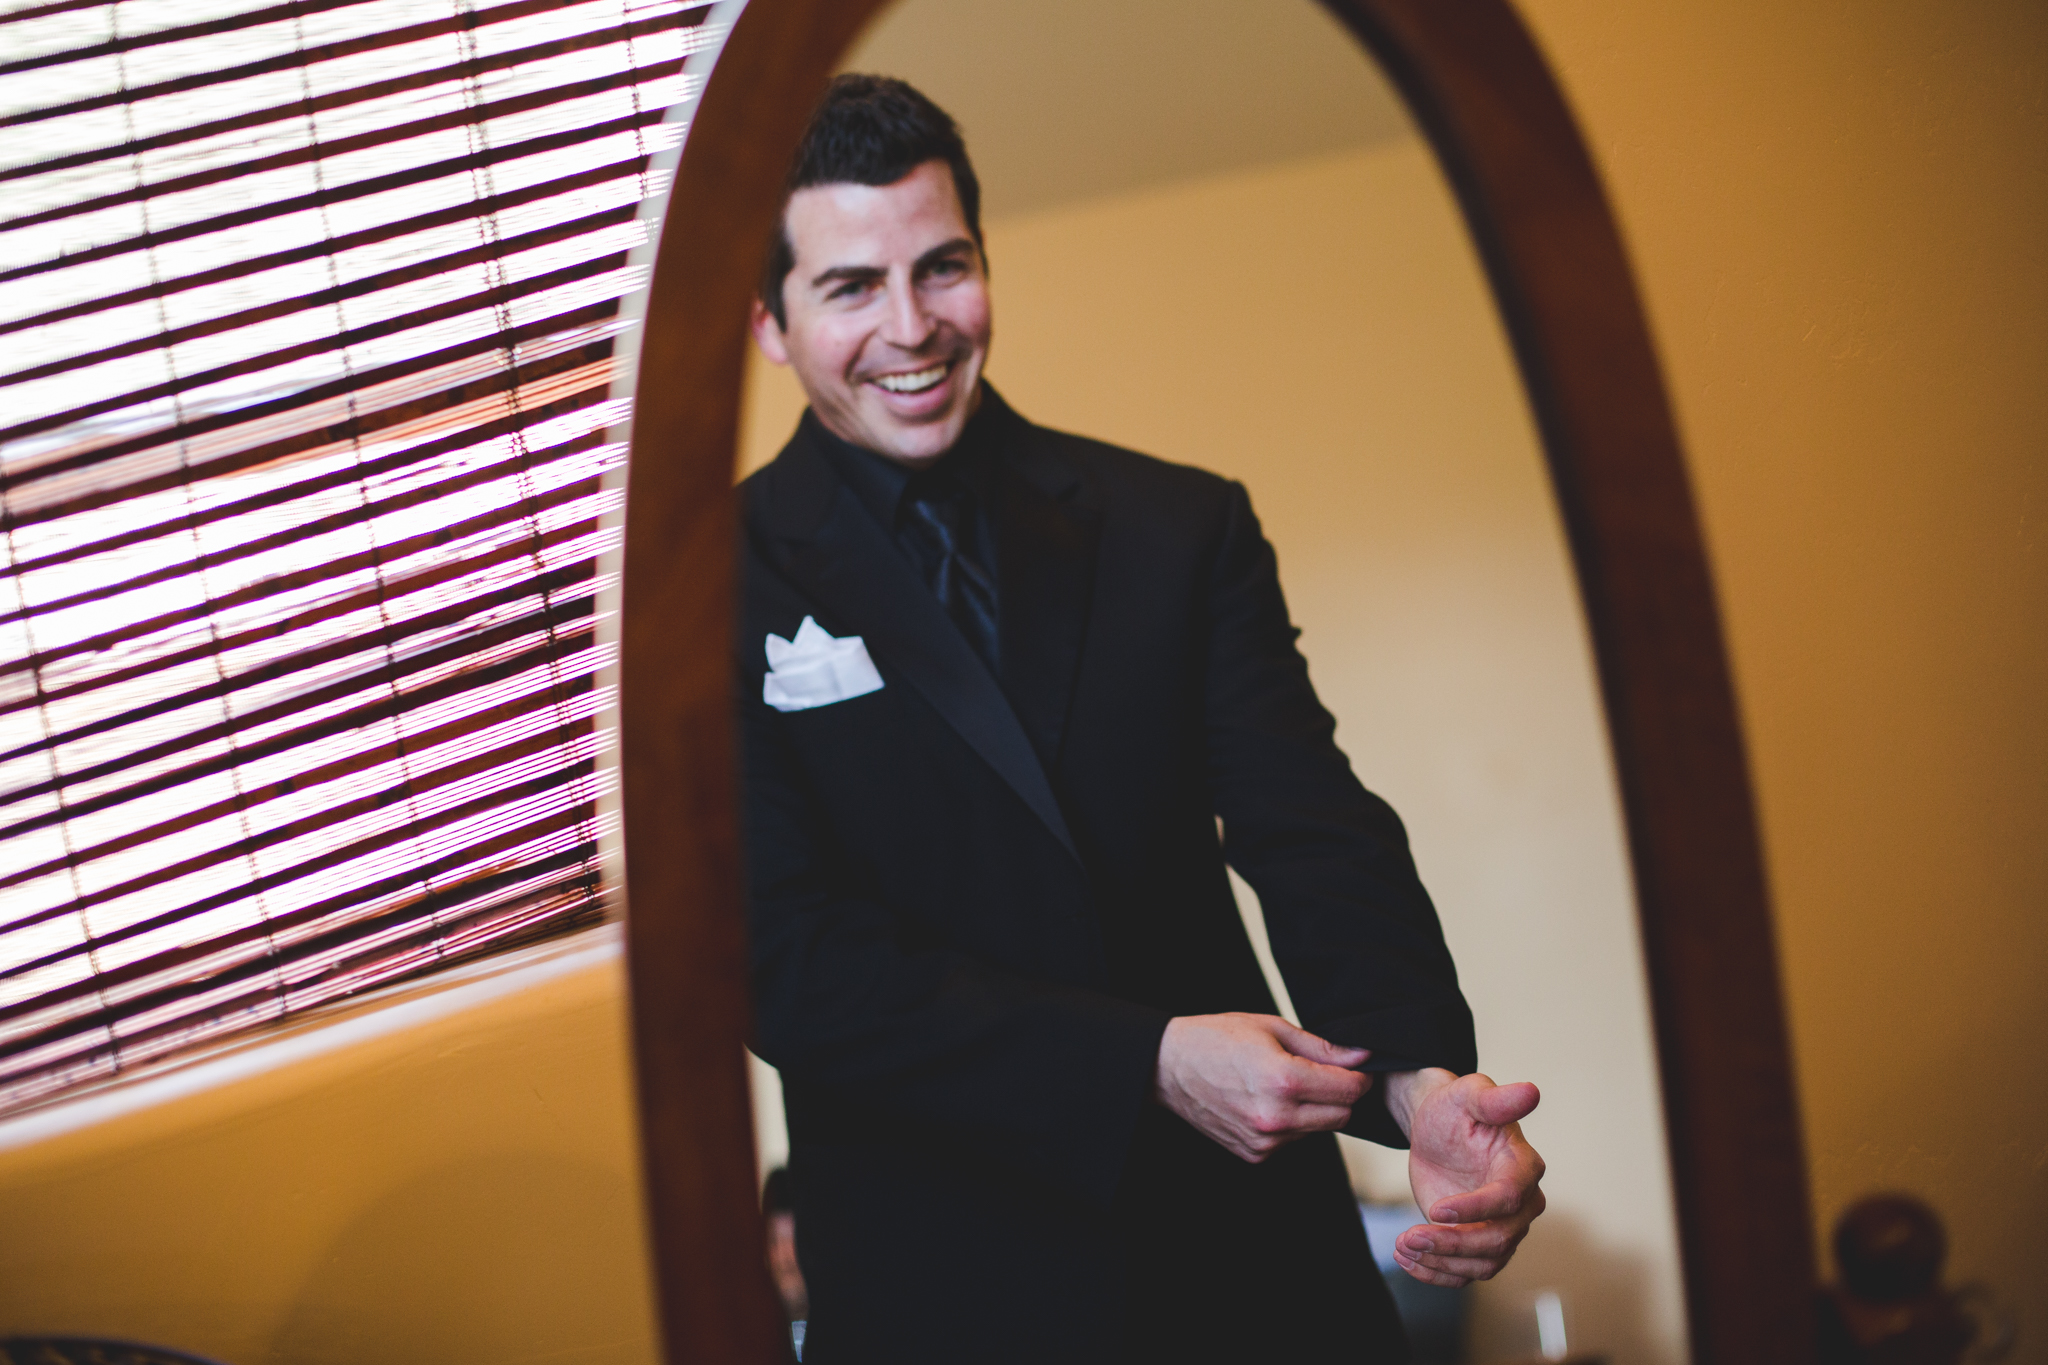 groom smiling in mirror phoenix wedding photography mj